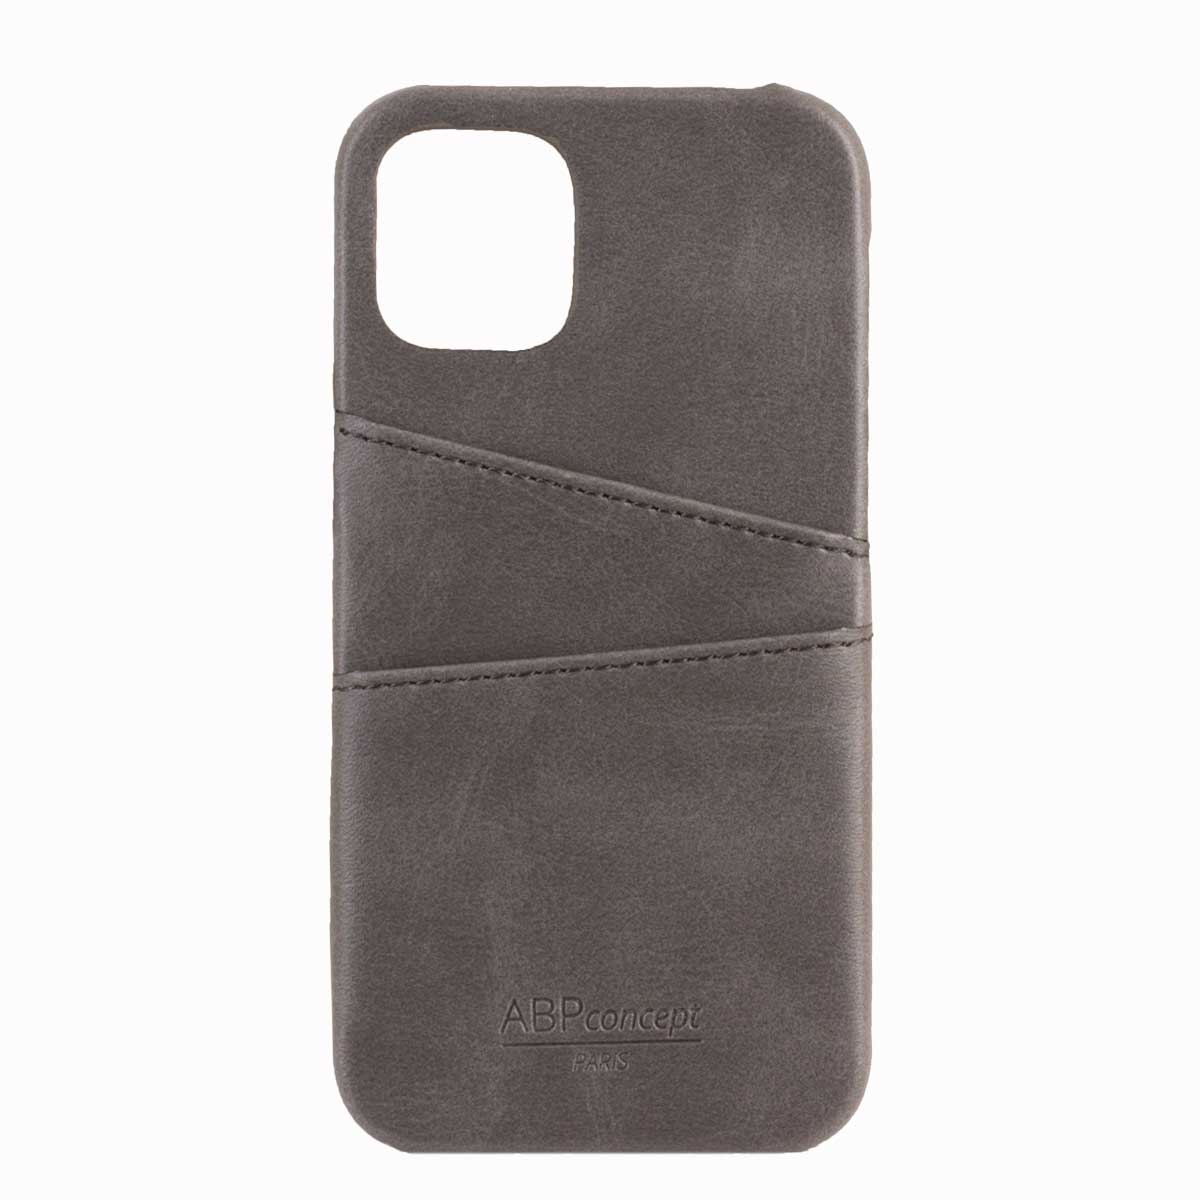 iPhone case / cover - iPhone 12 & 11 ( Pro / Max / Mini ) - Black, grey, blue, brown...